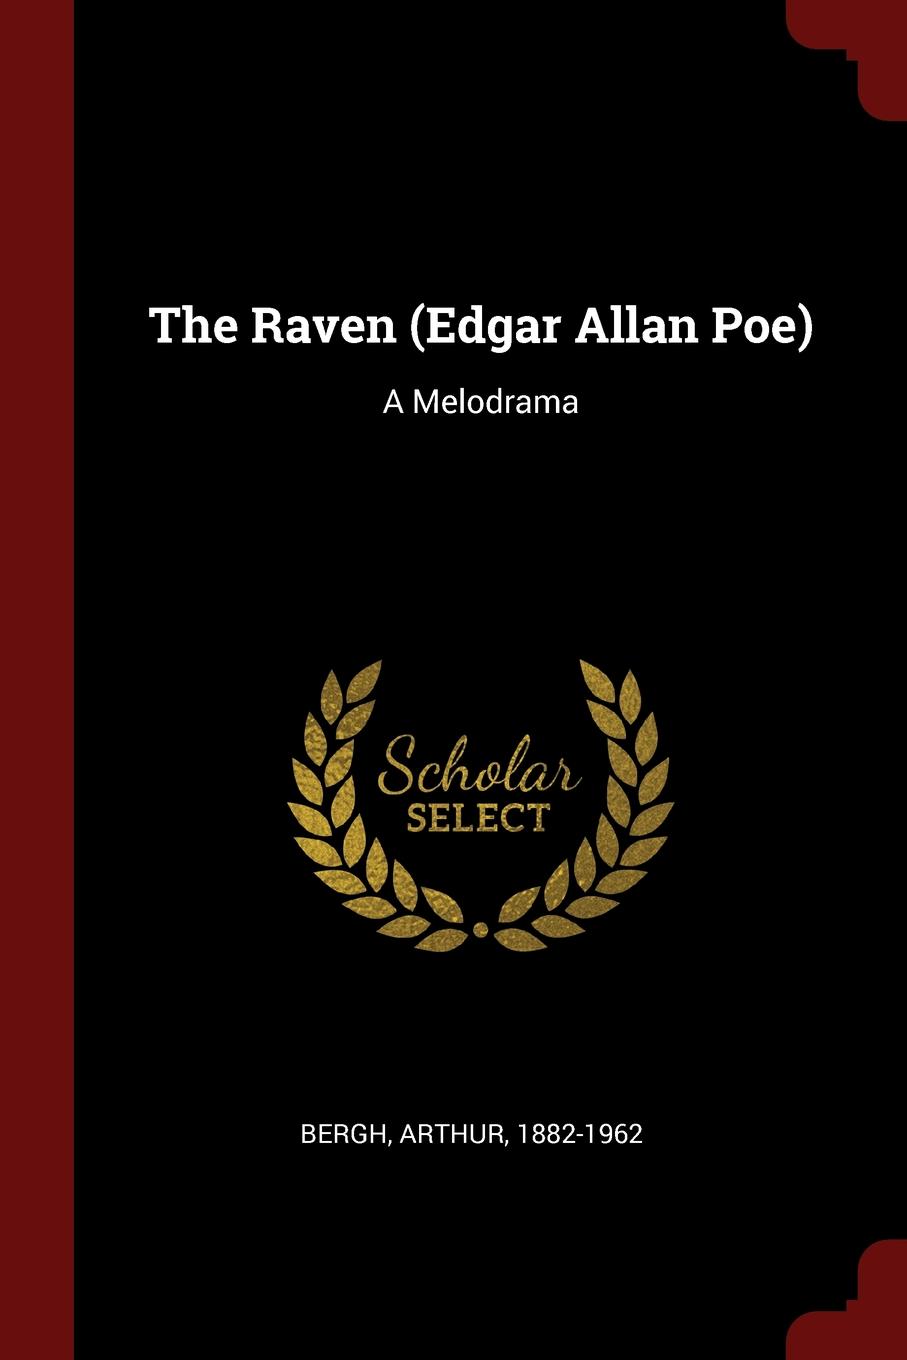 The Raven (Edgar Allan Poe). A Melodrama